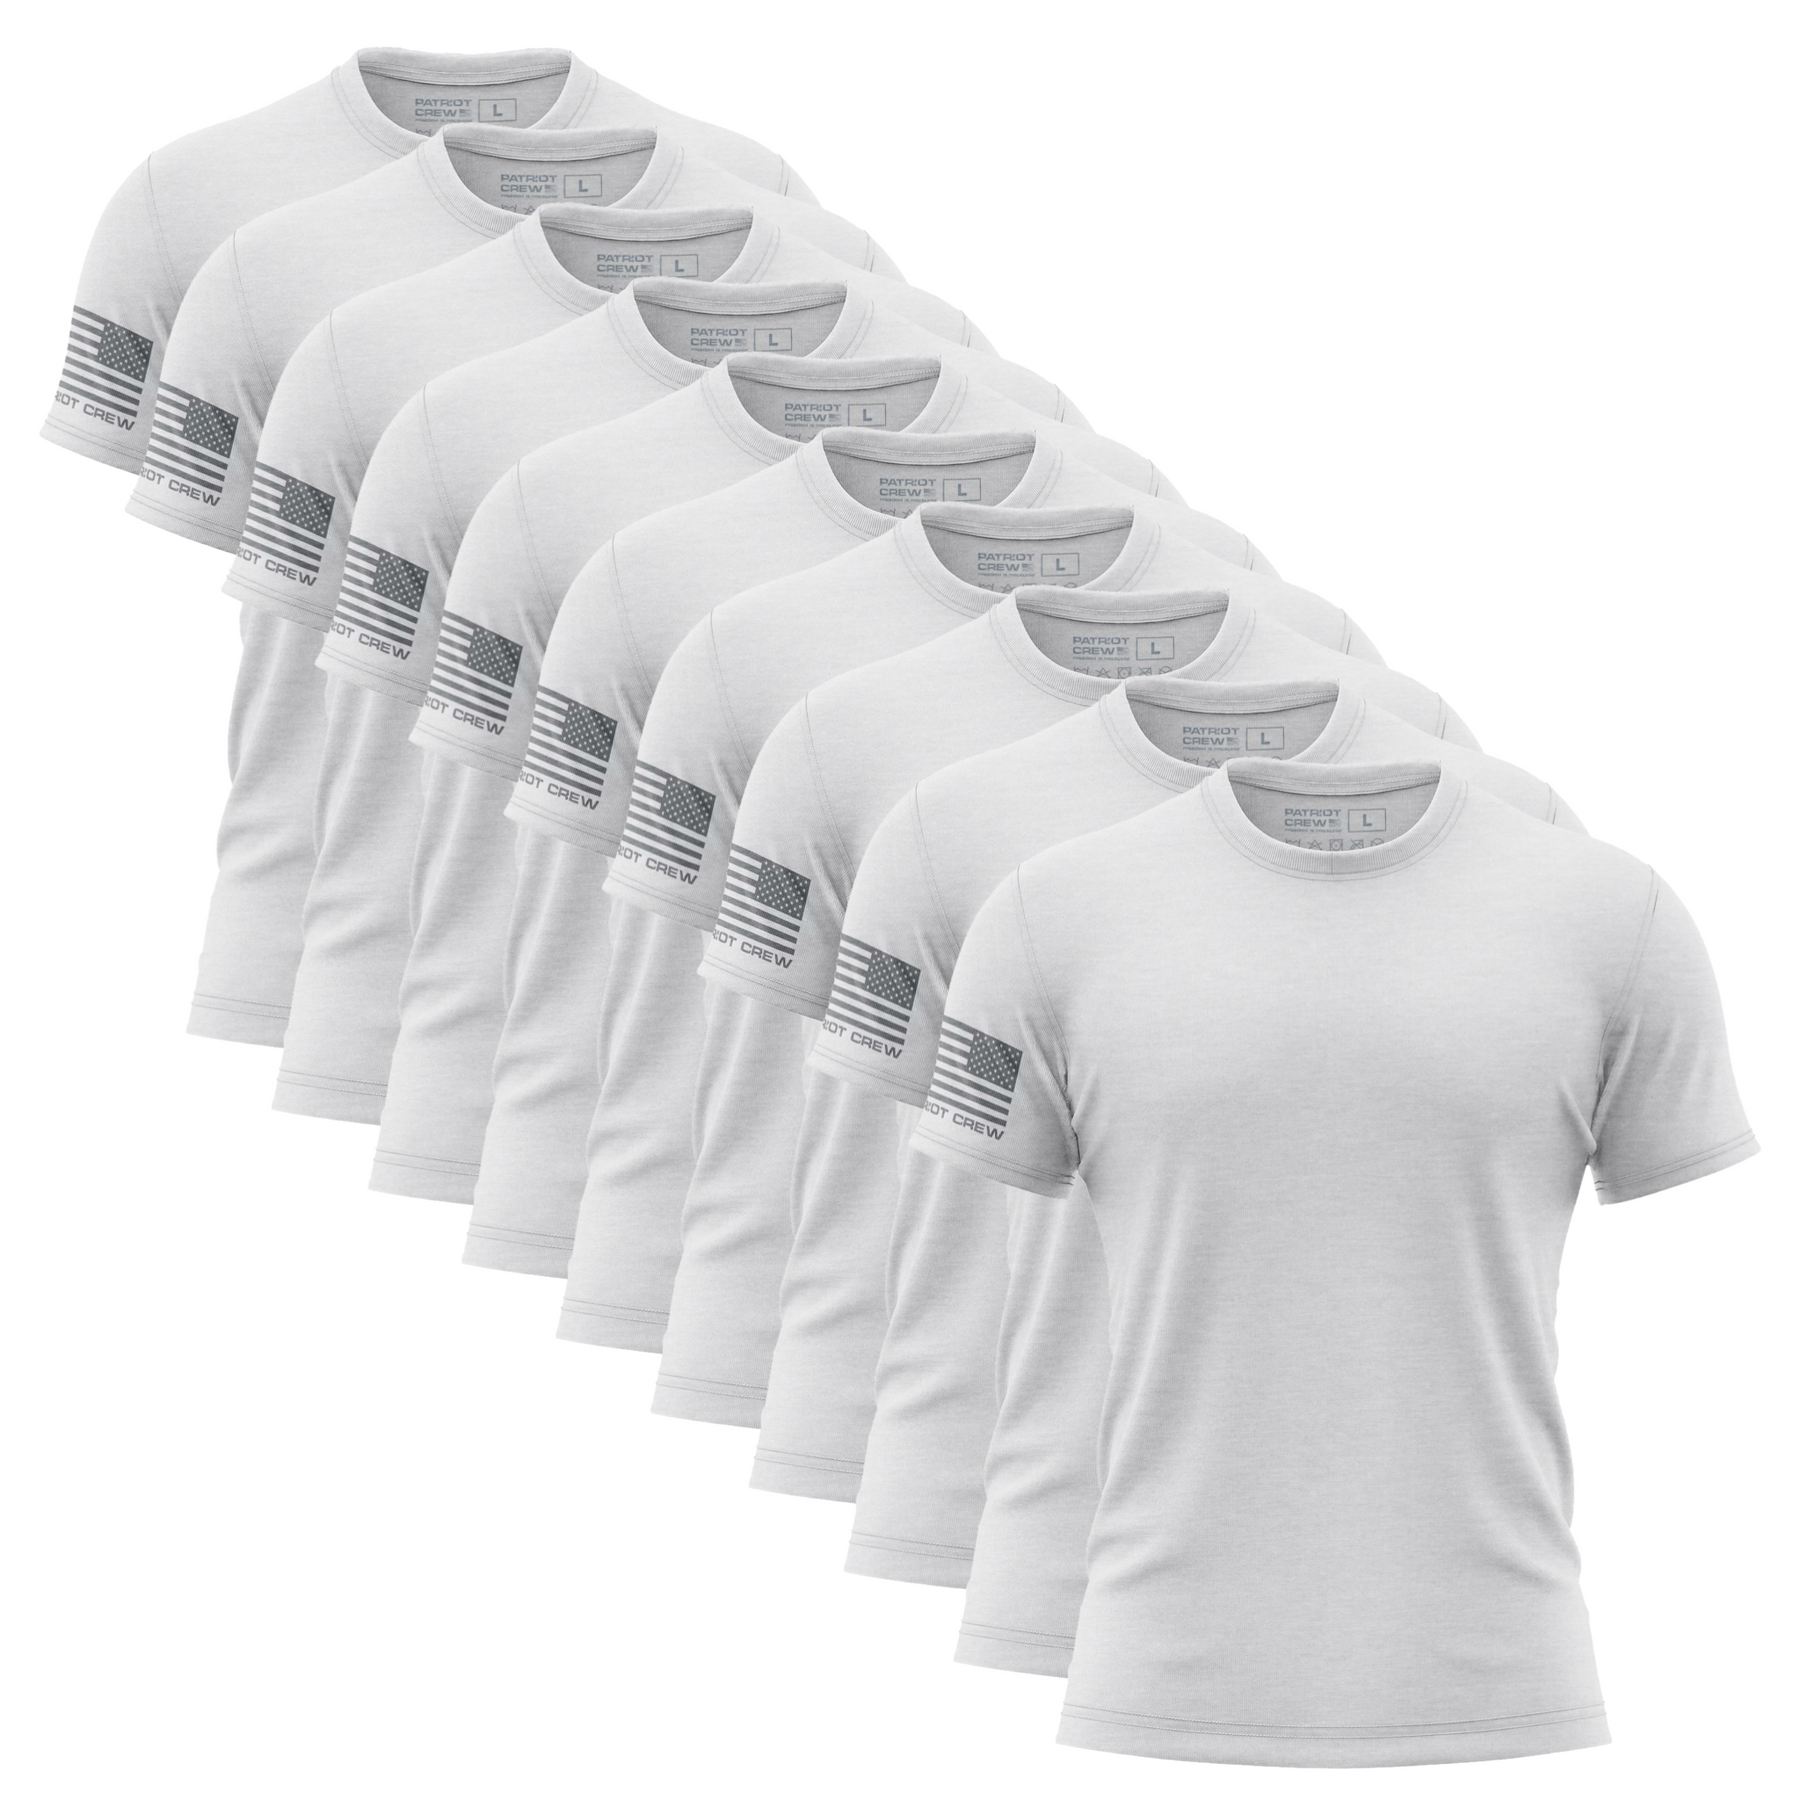 White T-Shirt (10 Pack)